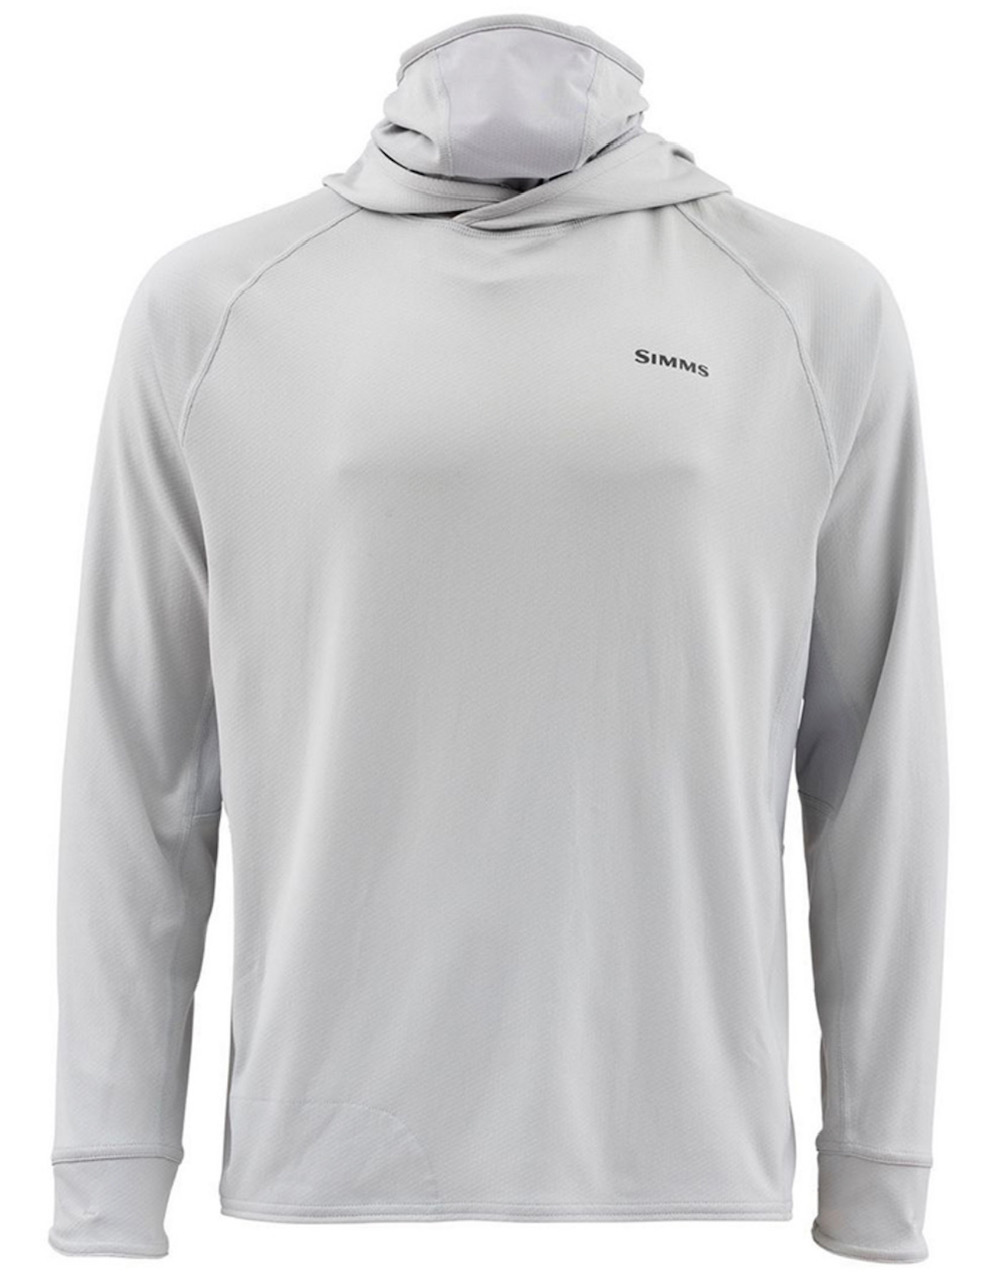 Simms M's Solarflex UltraCool Armor Shirt - Sterling - Large